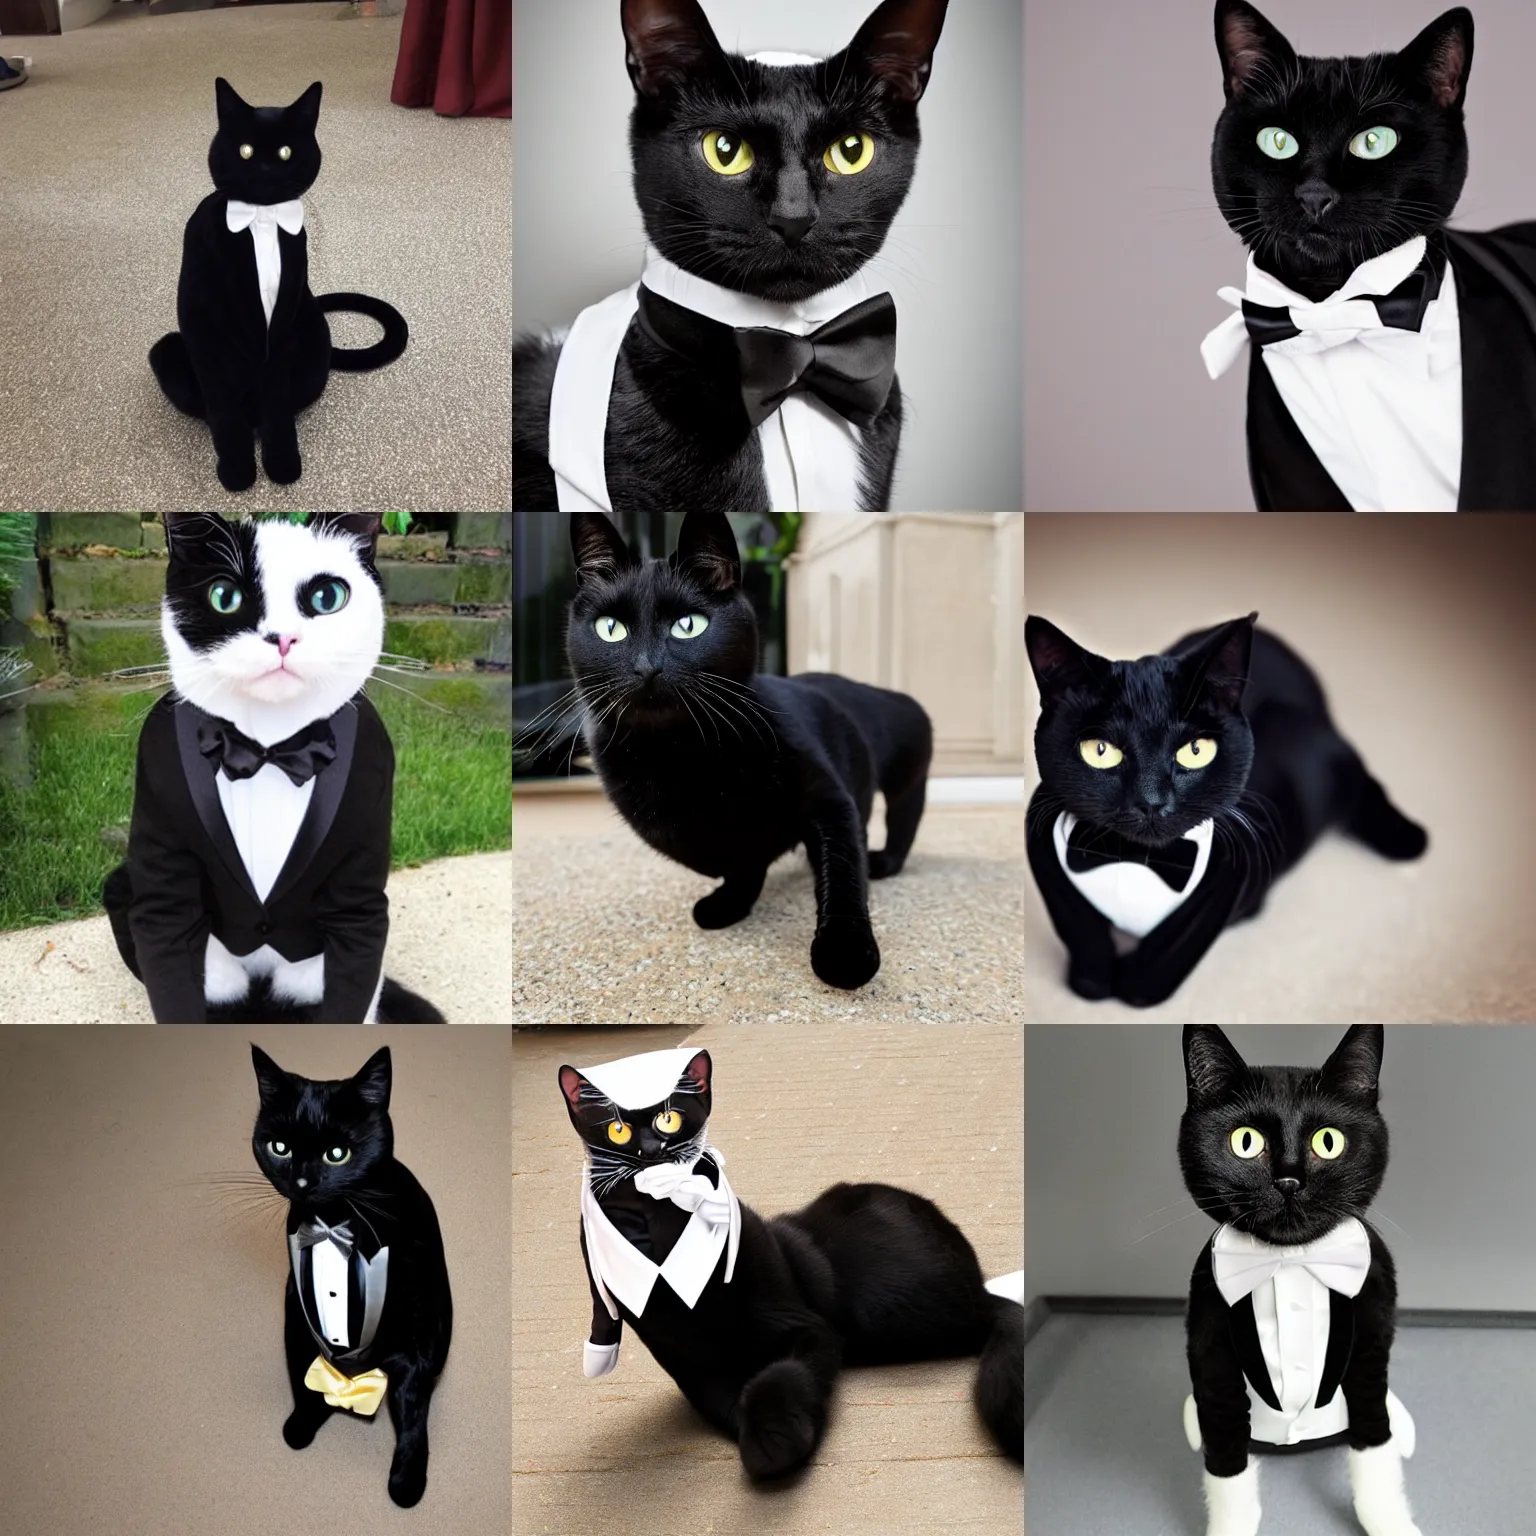 Prompt: black cat wearing a tuxedo